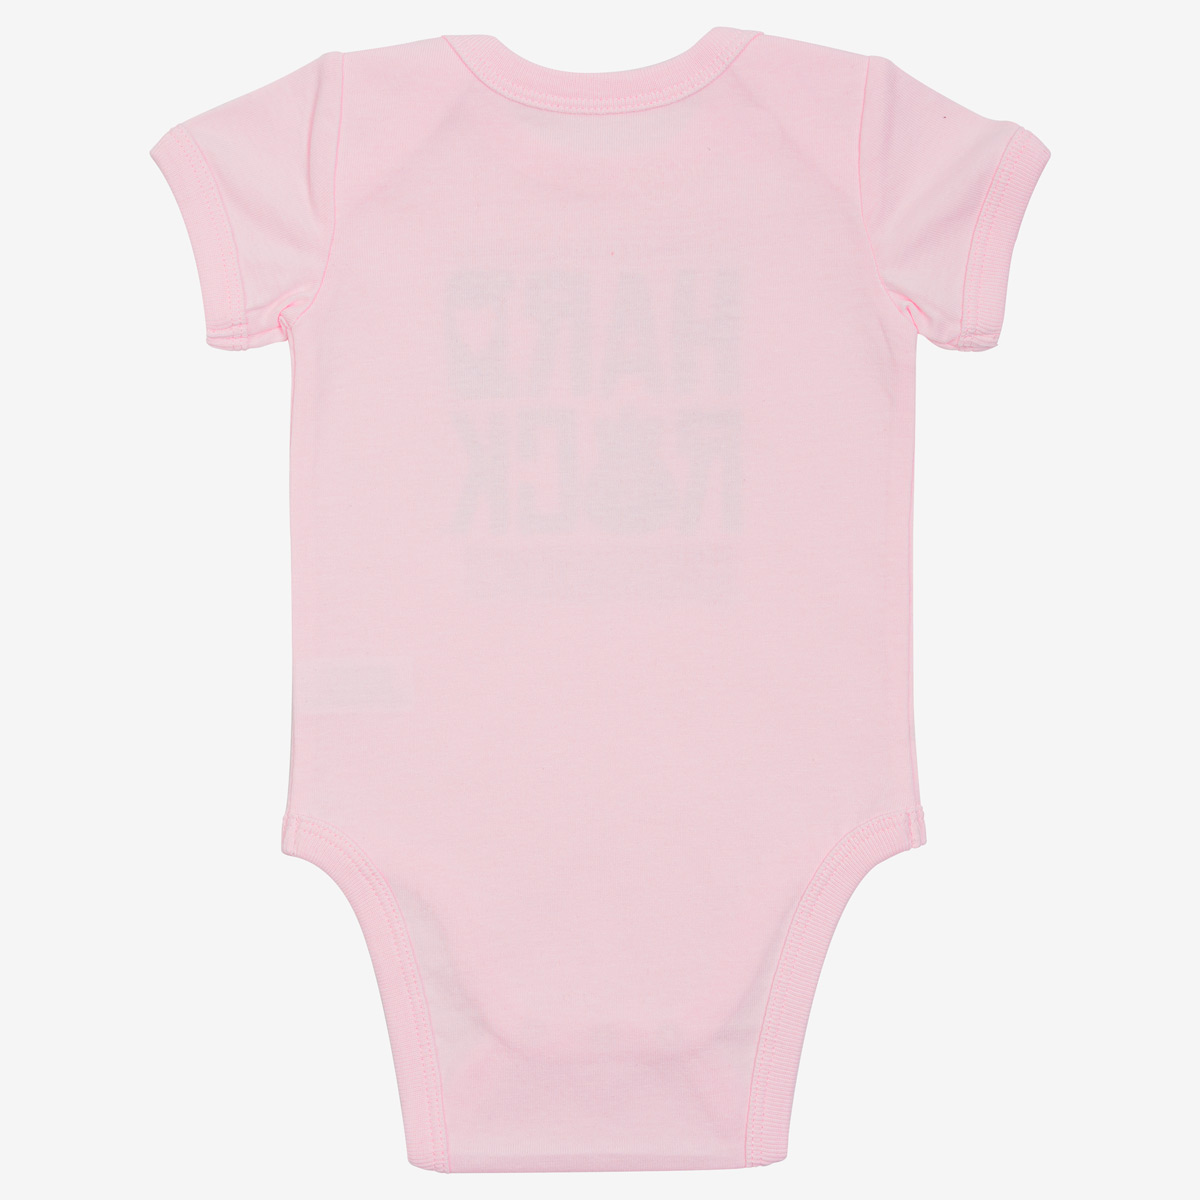 Rock Kids Baby Onesie in Pink with Logo Wings Design image number 2